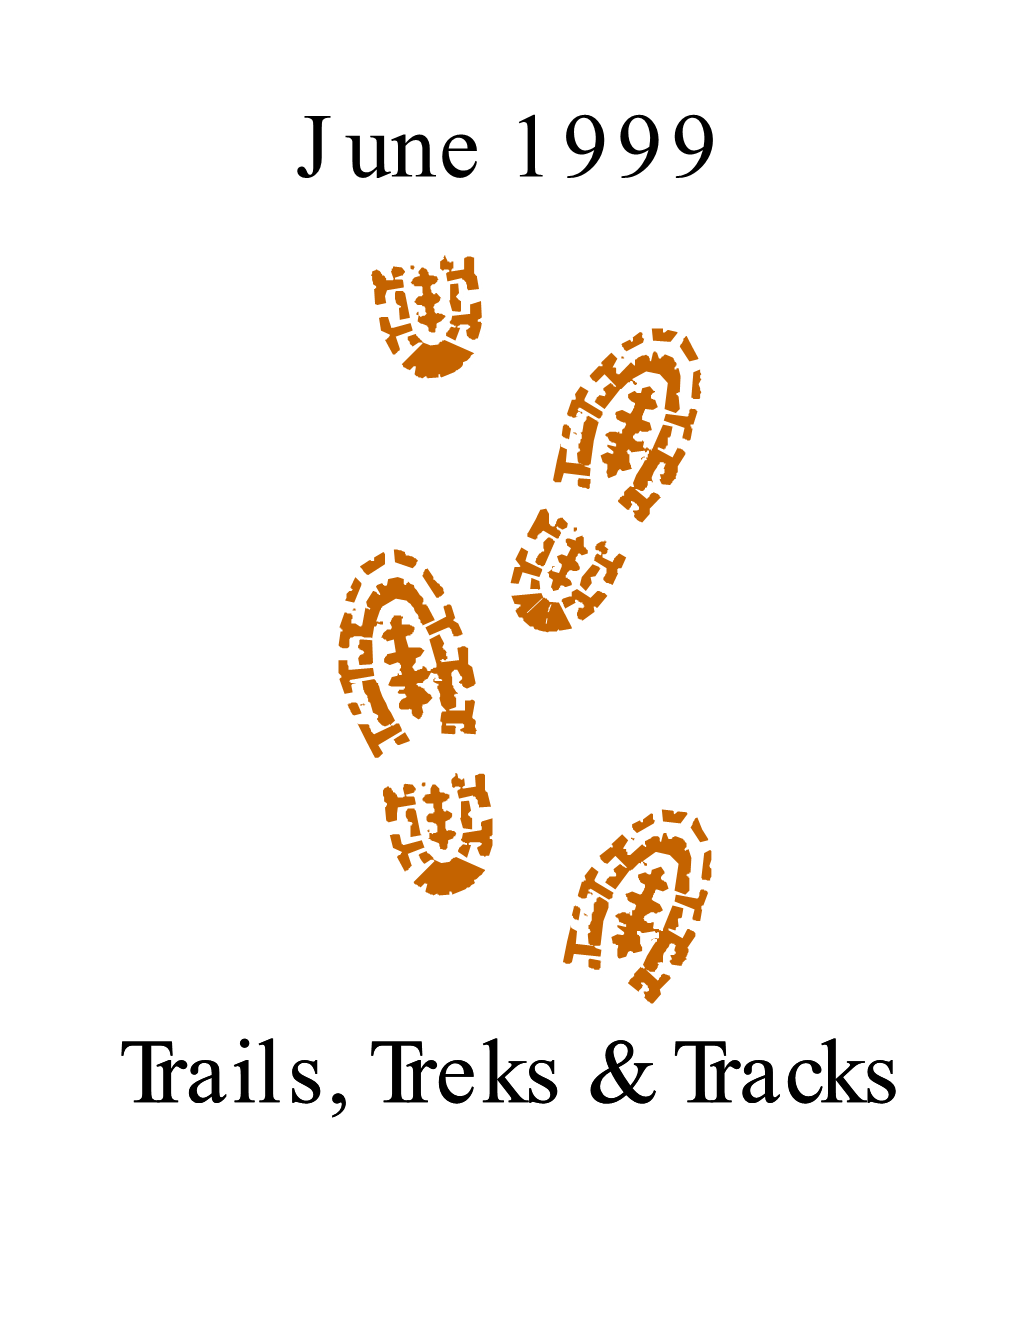 June 1999 Trails, Treks & Tracks